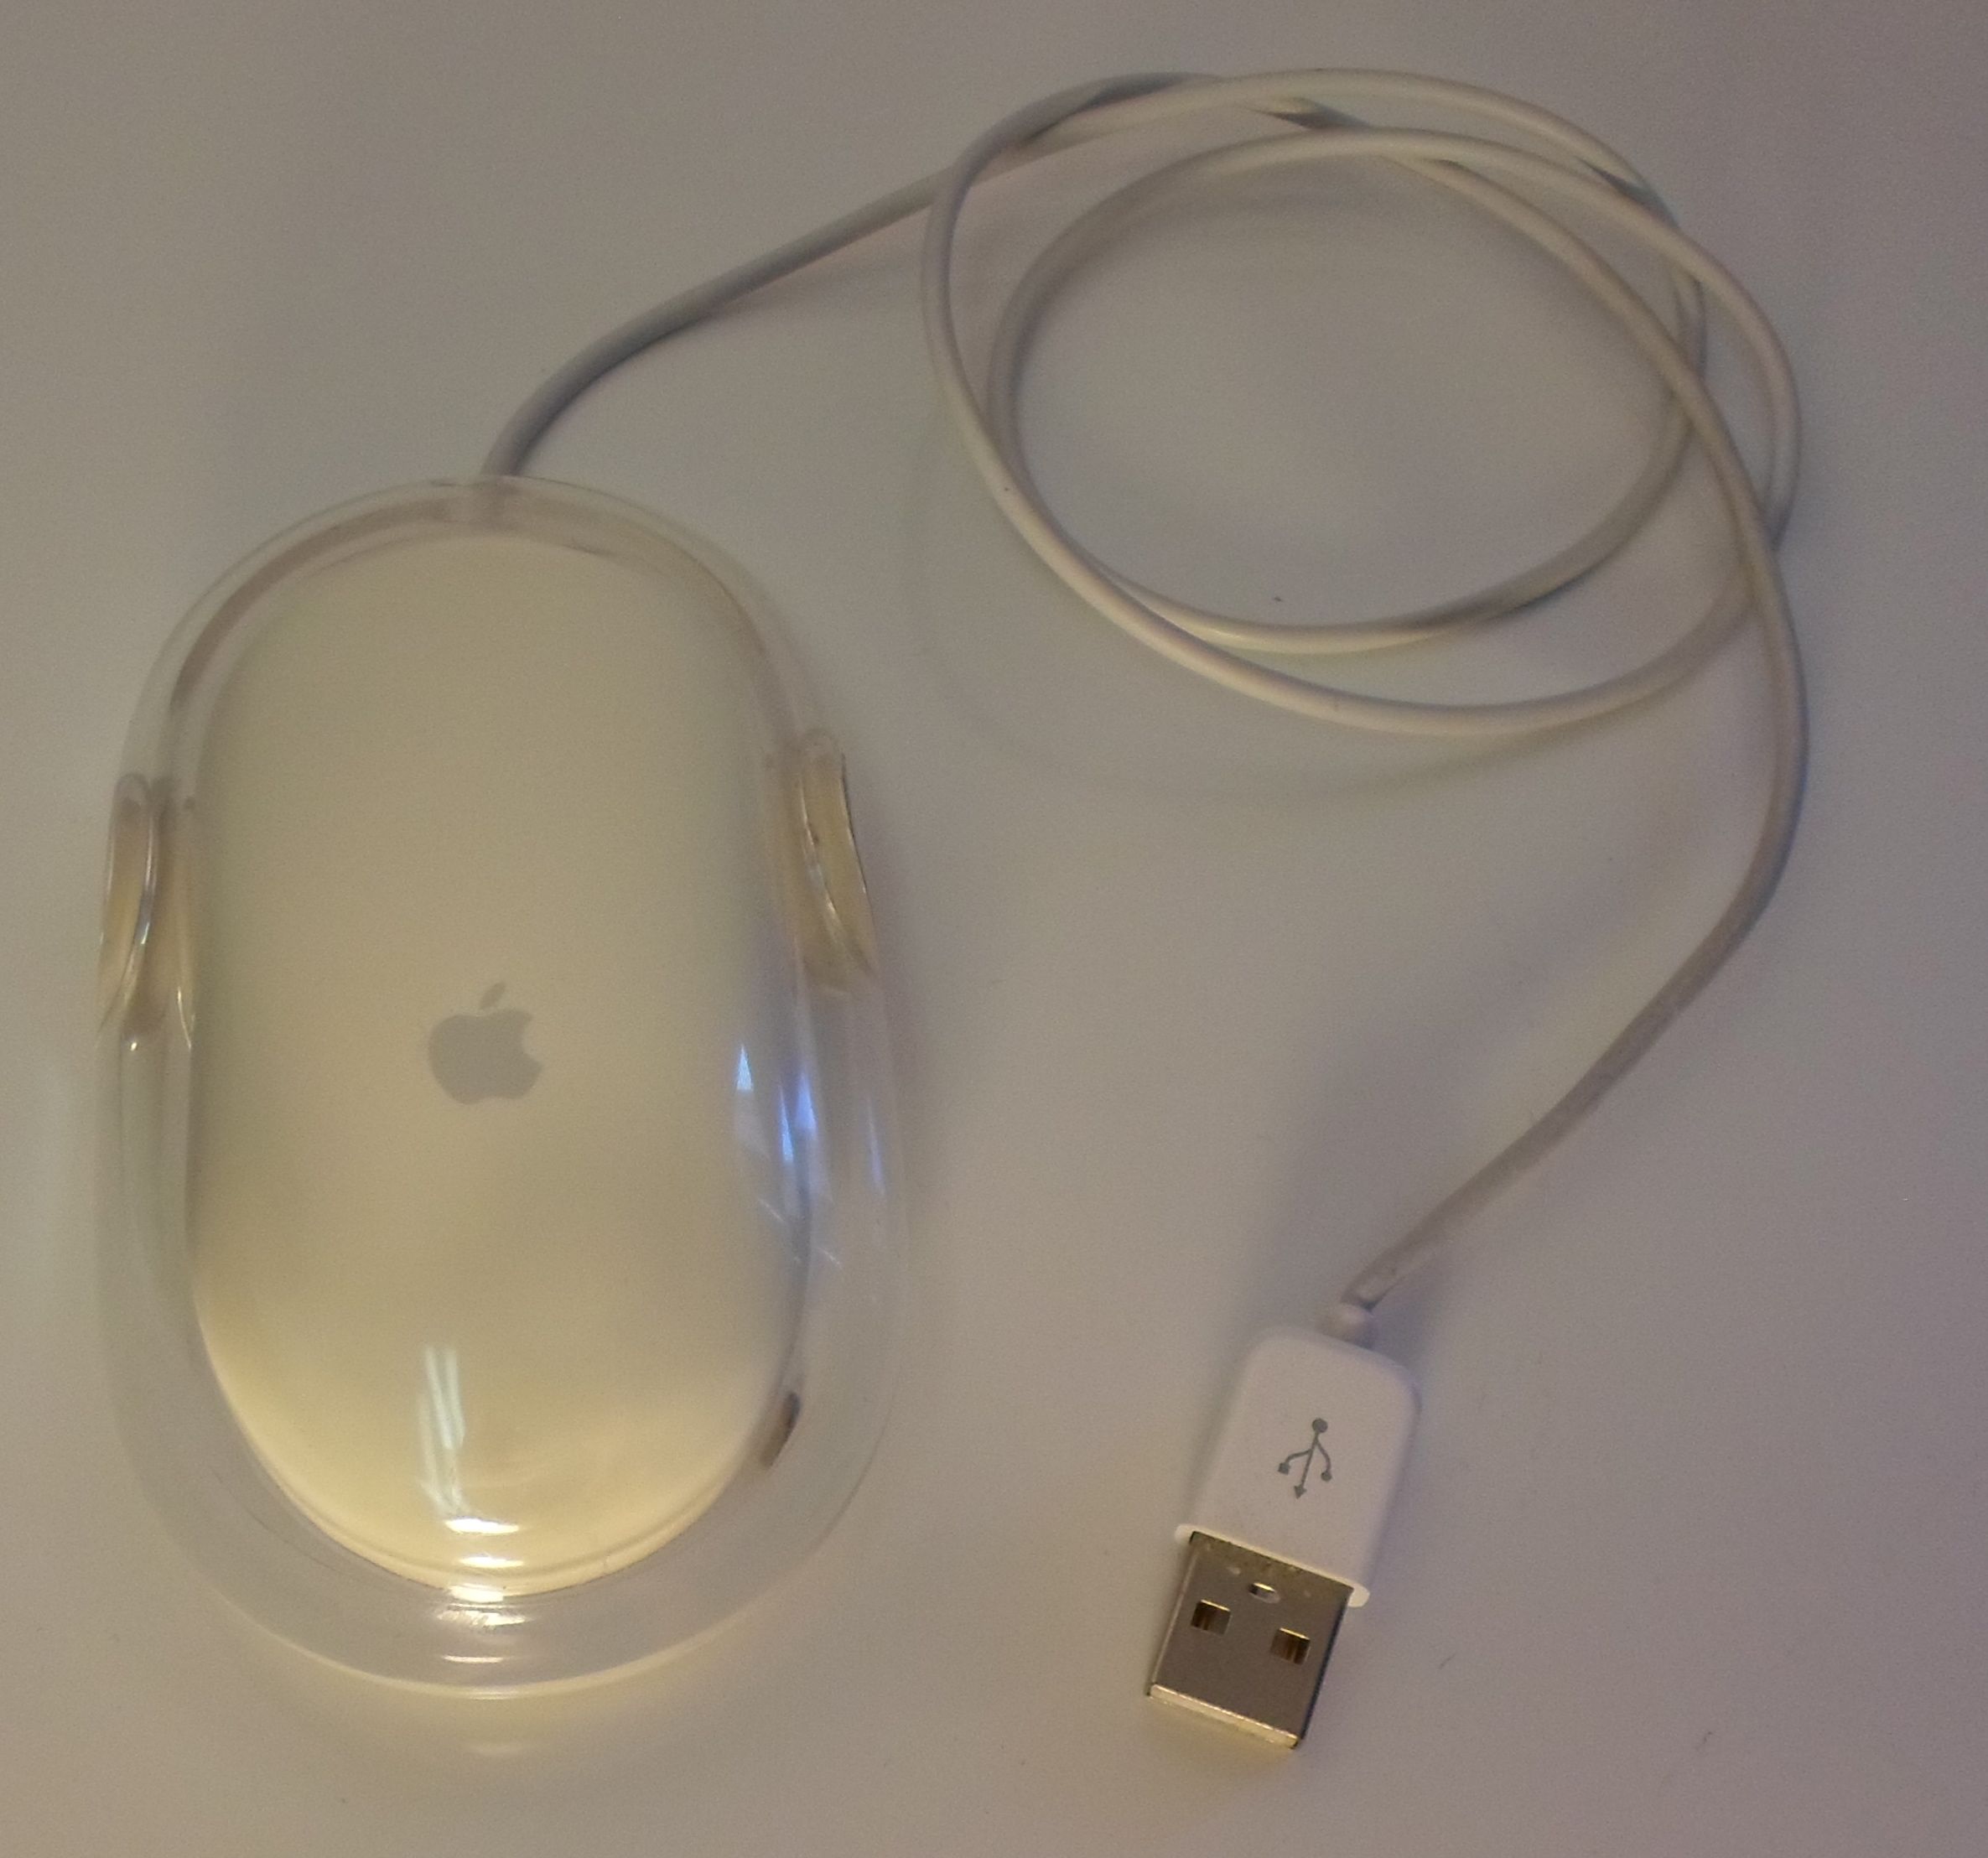 Apple Desktop Mouse